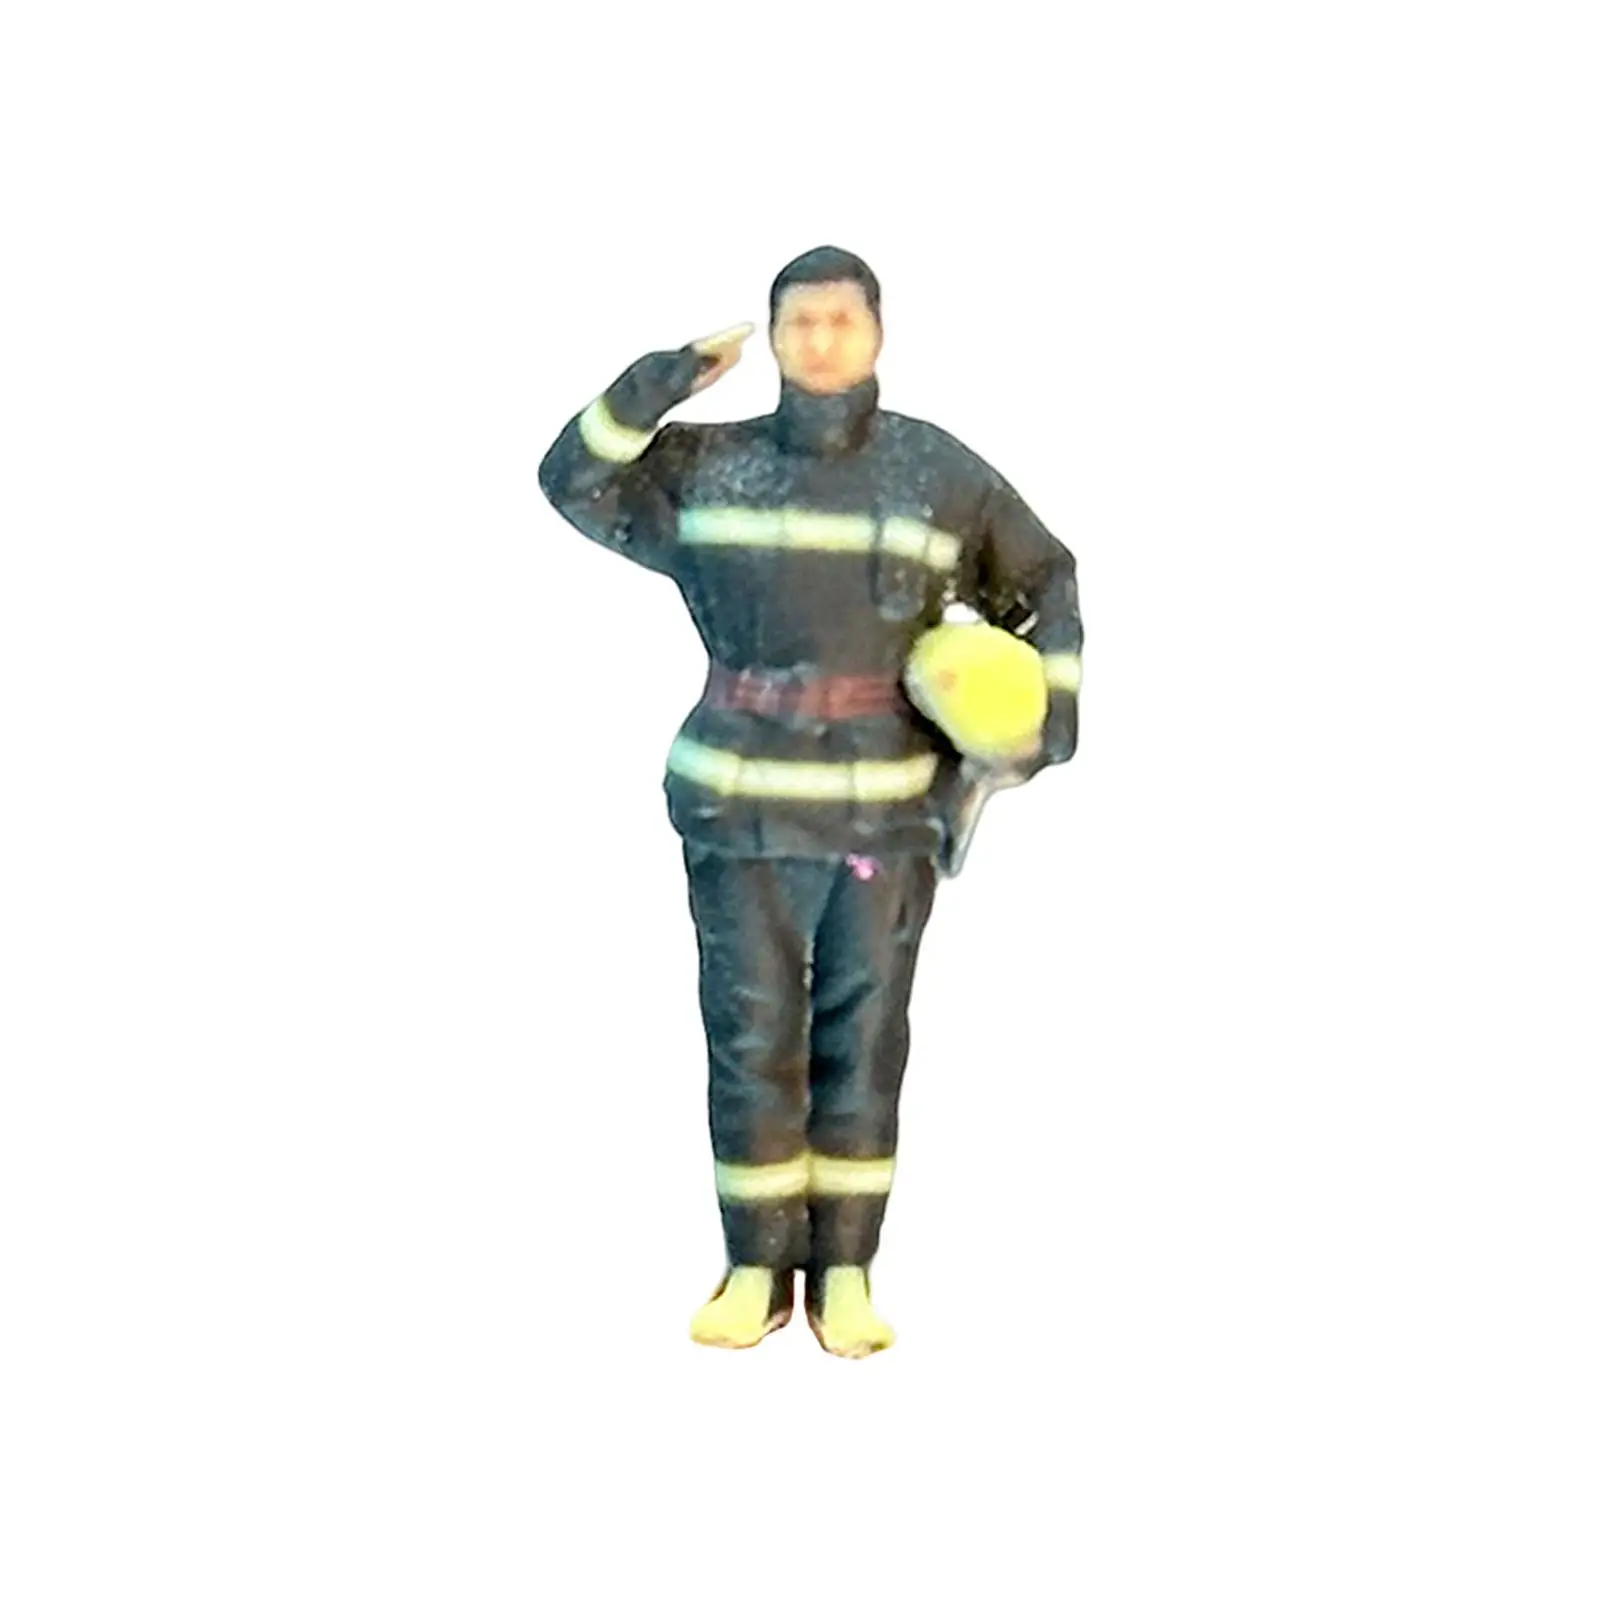 Miniature 1:64 Firefighter Figures Model Trains People Figures for DIY Scene